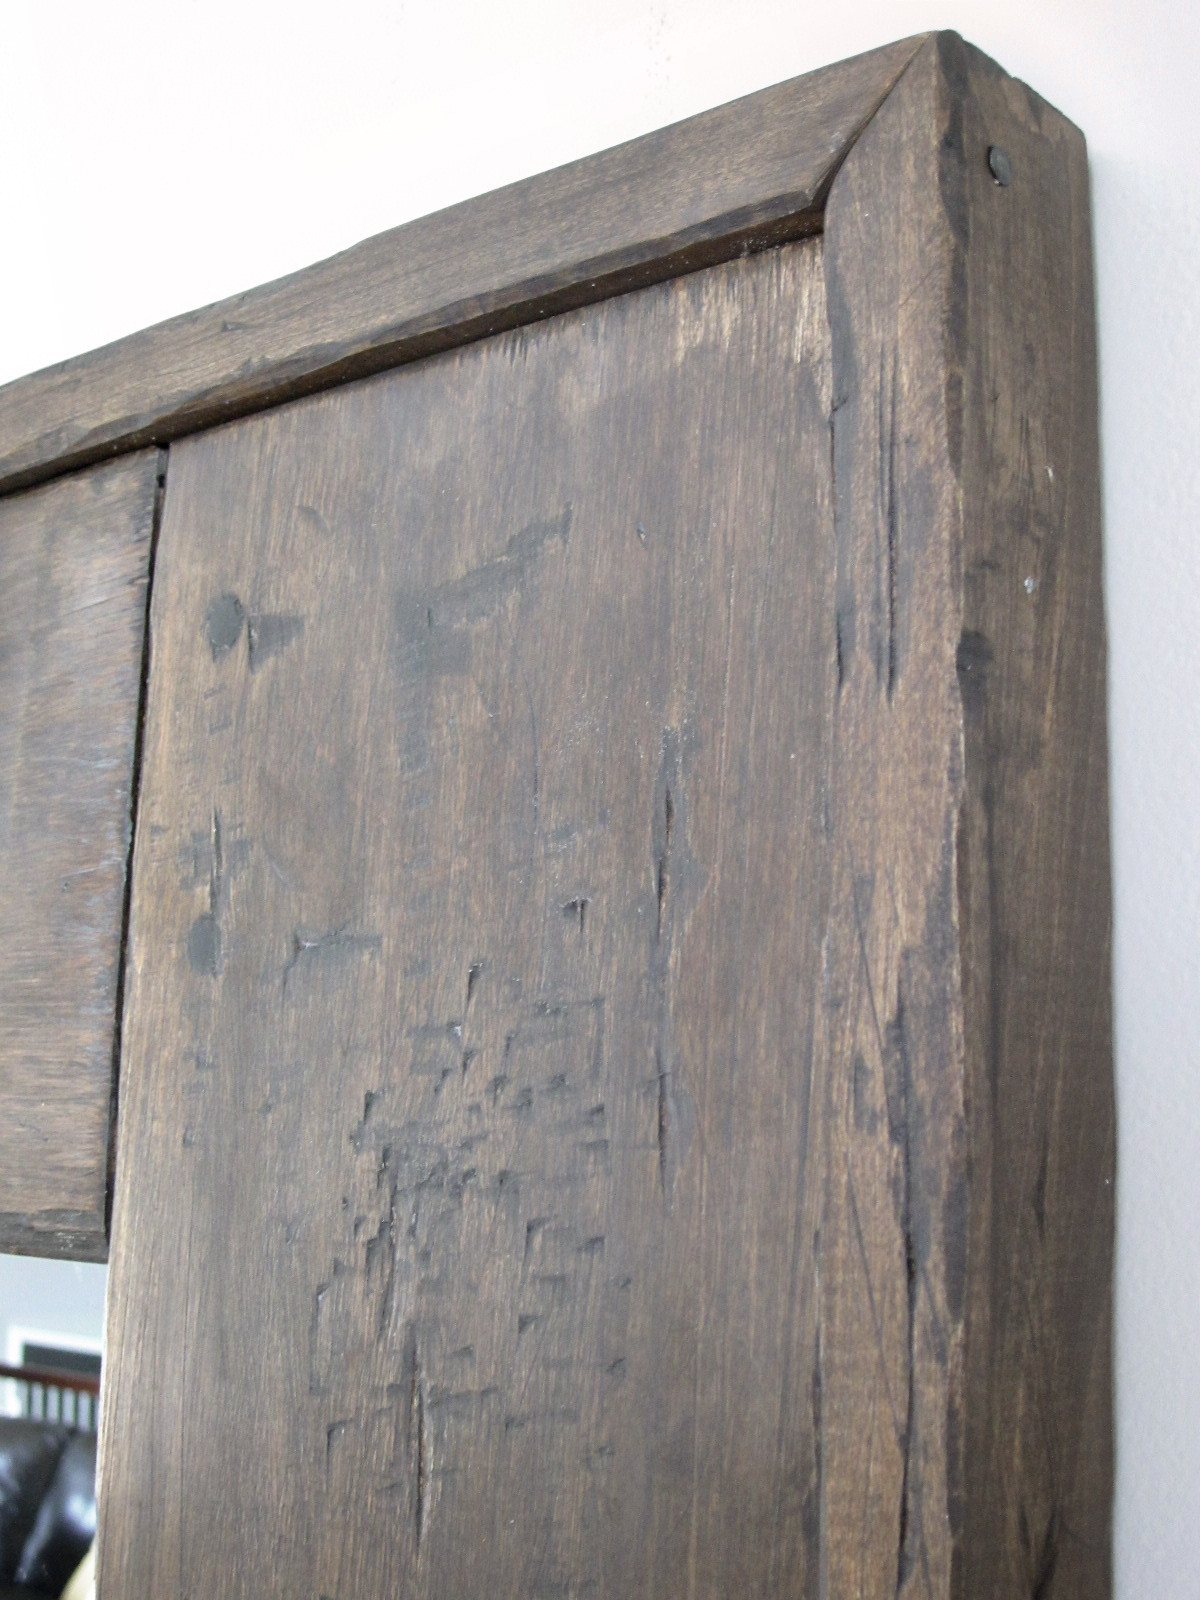 Best ideas about DIY Distressed Wood
. Save or Pin KrisKraft DIY Distressed Mirror Now.